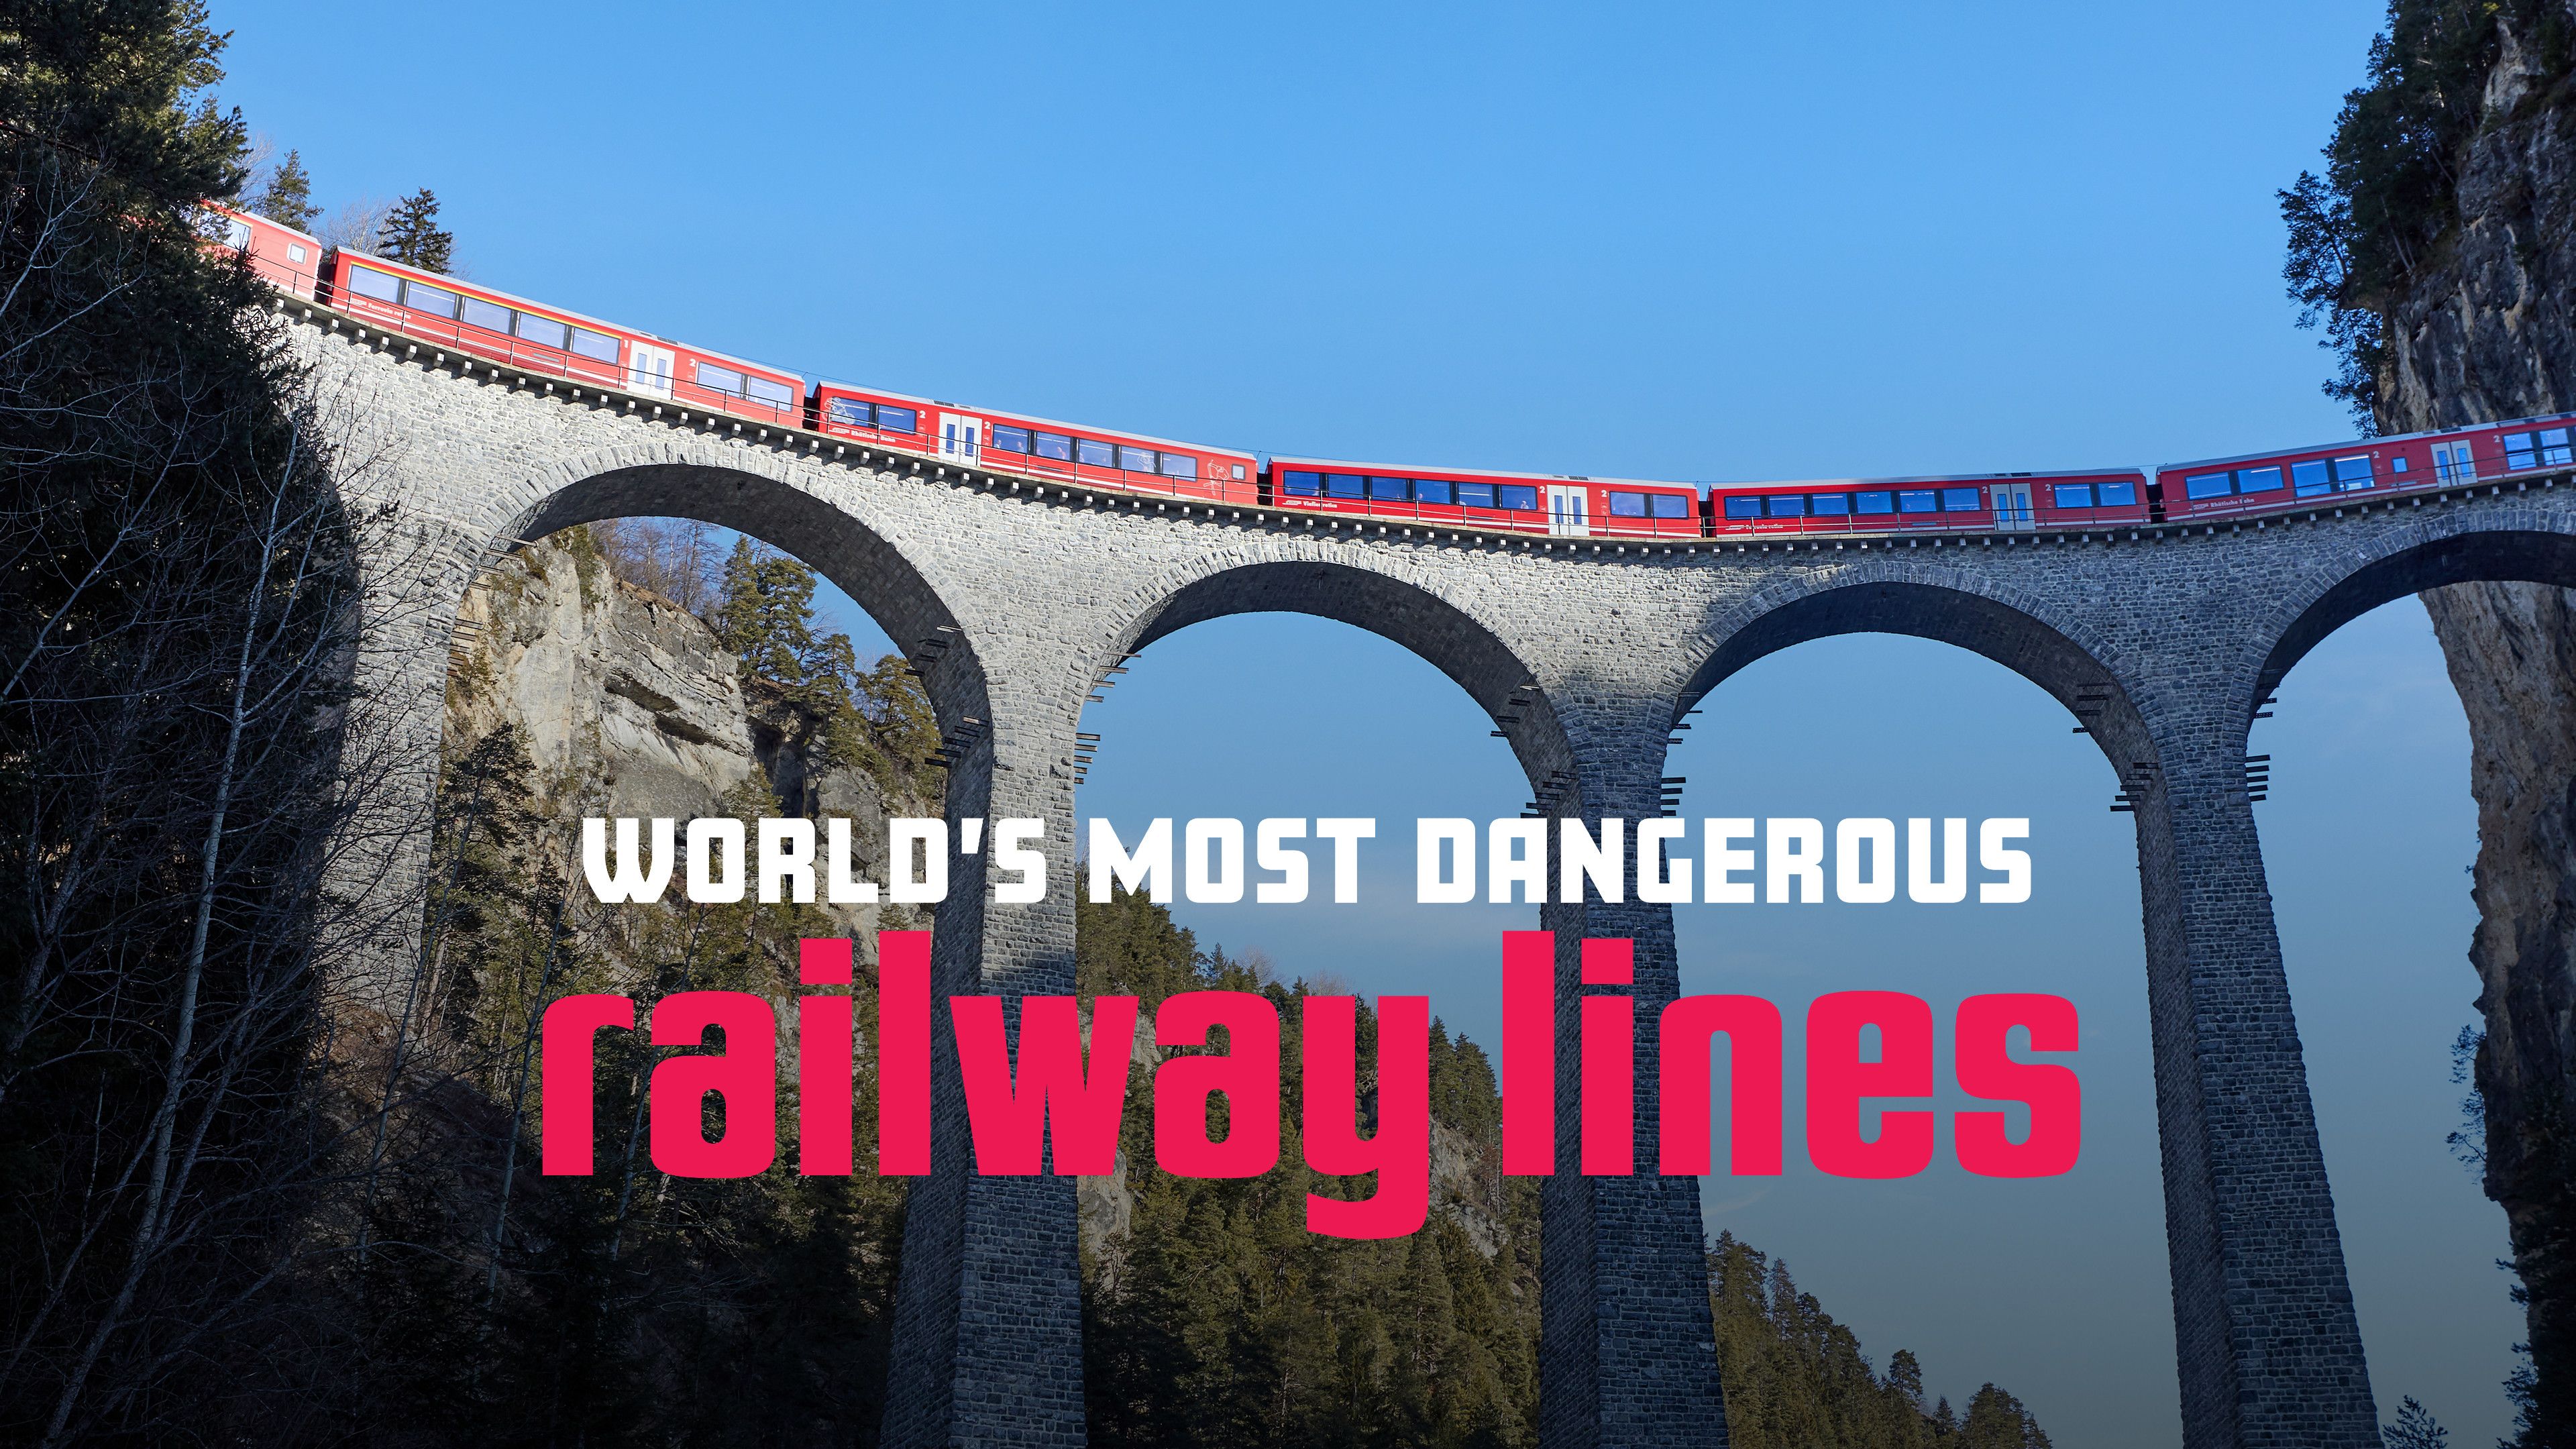 World's Most Dangerous Railway Lines